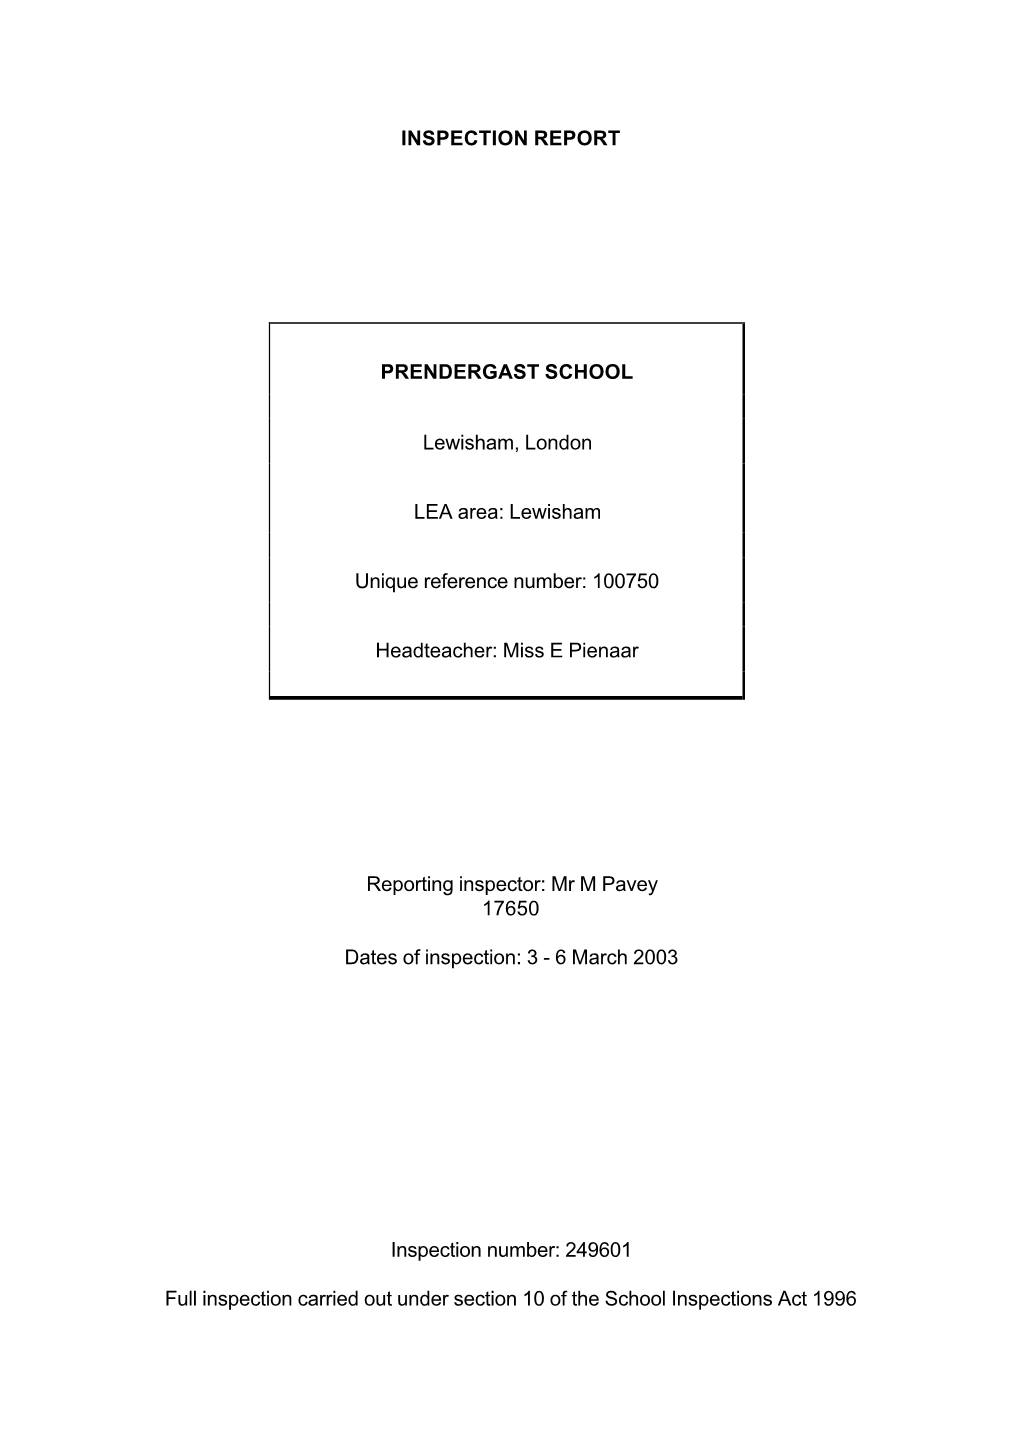 INSPECTION REPORT PRENDERGAST SCHOOL Lewisham, London LEA Area: Lewisham Unique Reference Number: 100750 Headteacher: Miss E